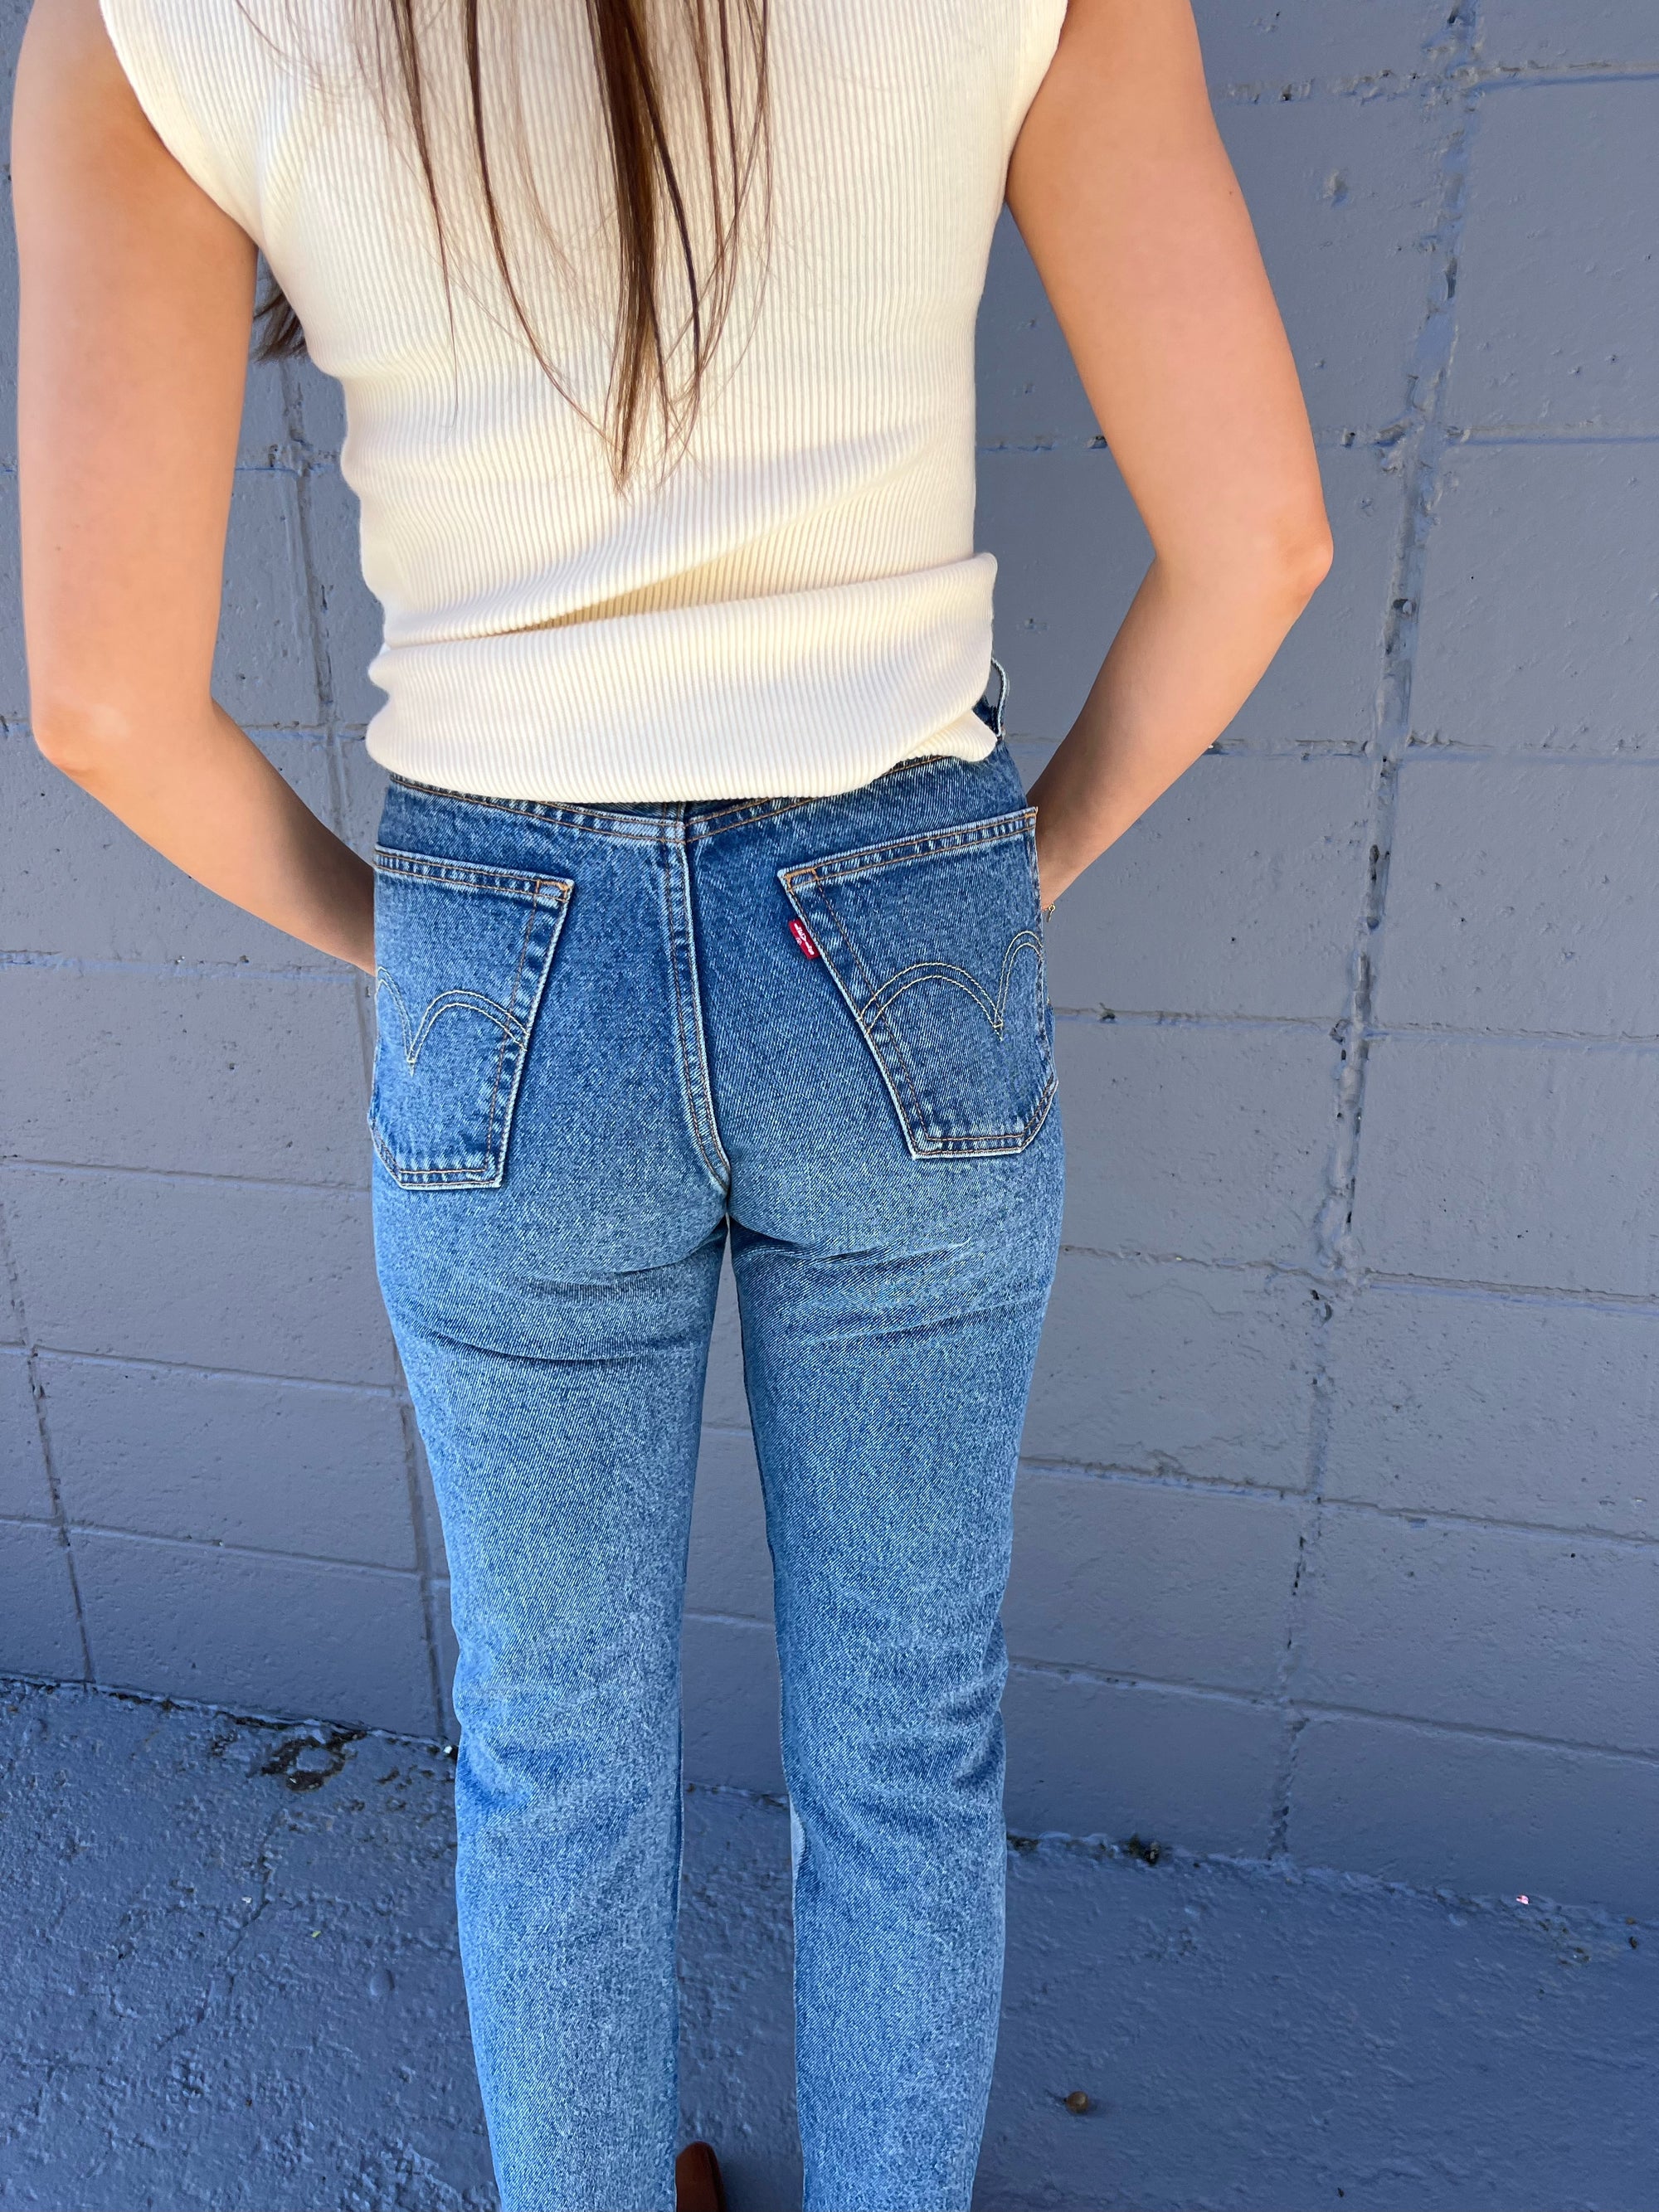 Levi's 501 Women's Long Bottom Jeans